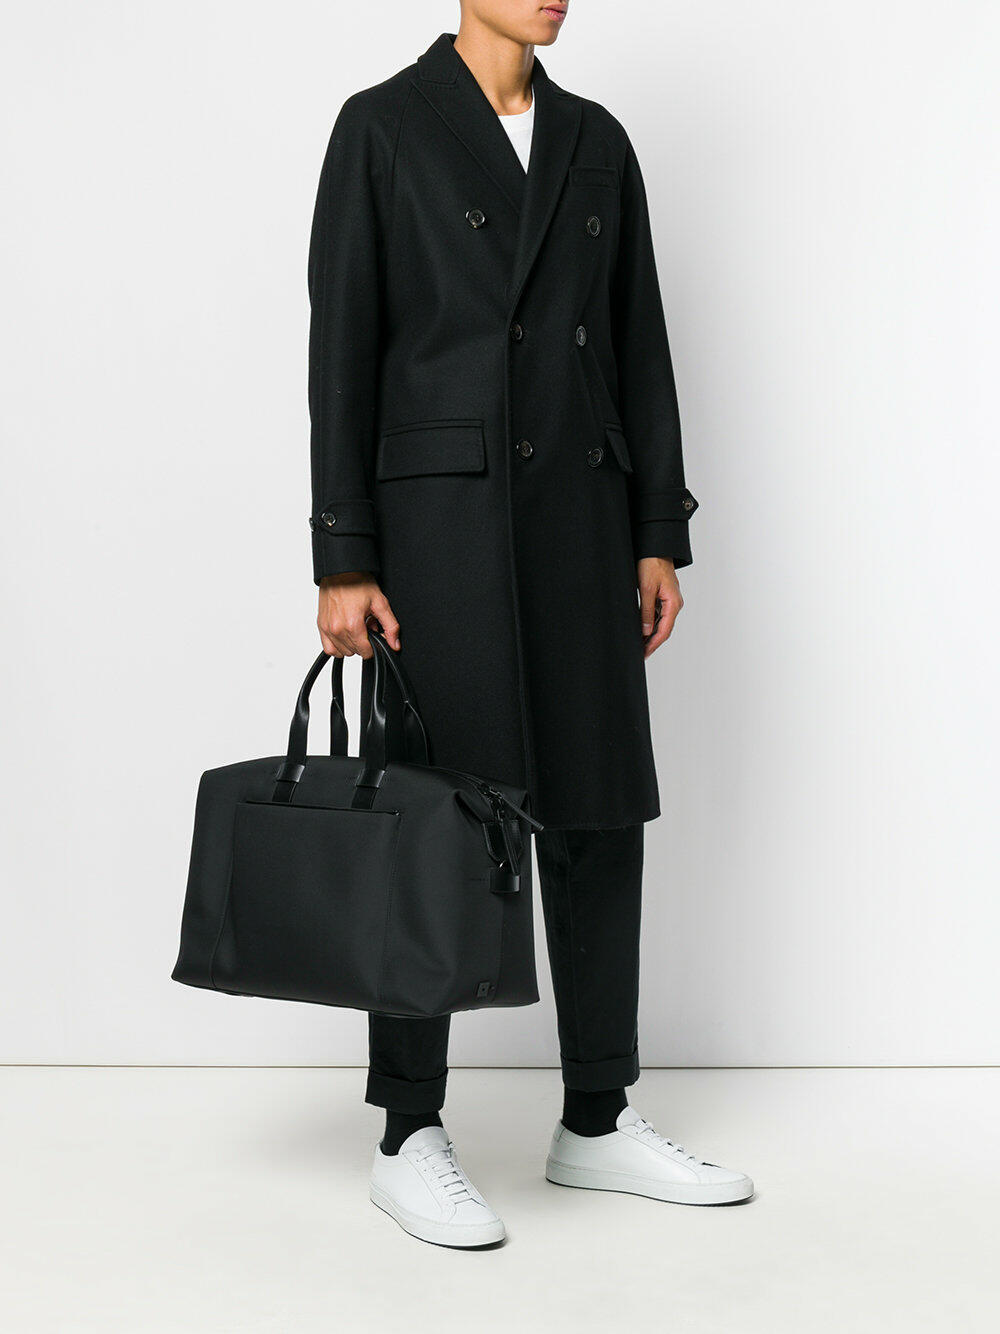 Troubadour - Black Nylon & Leather Weekender Bag